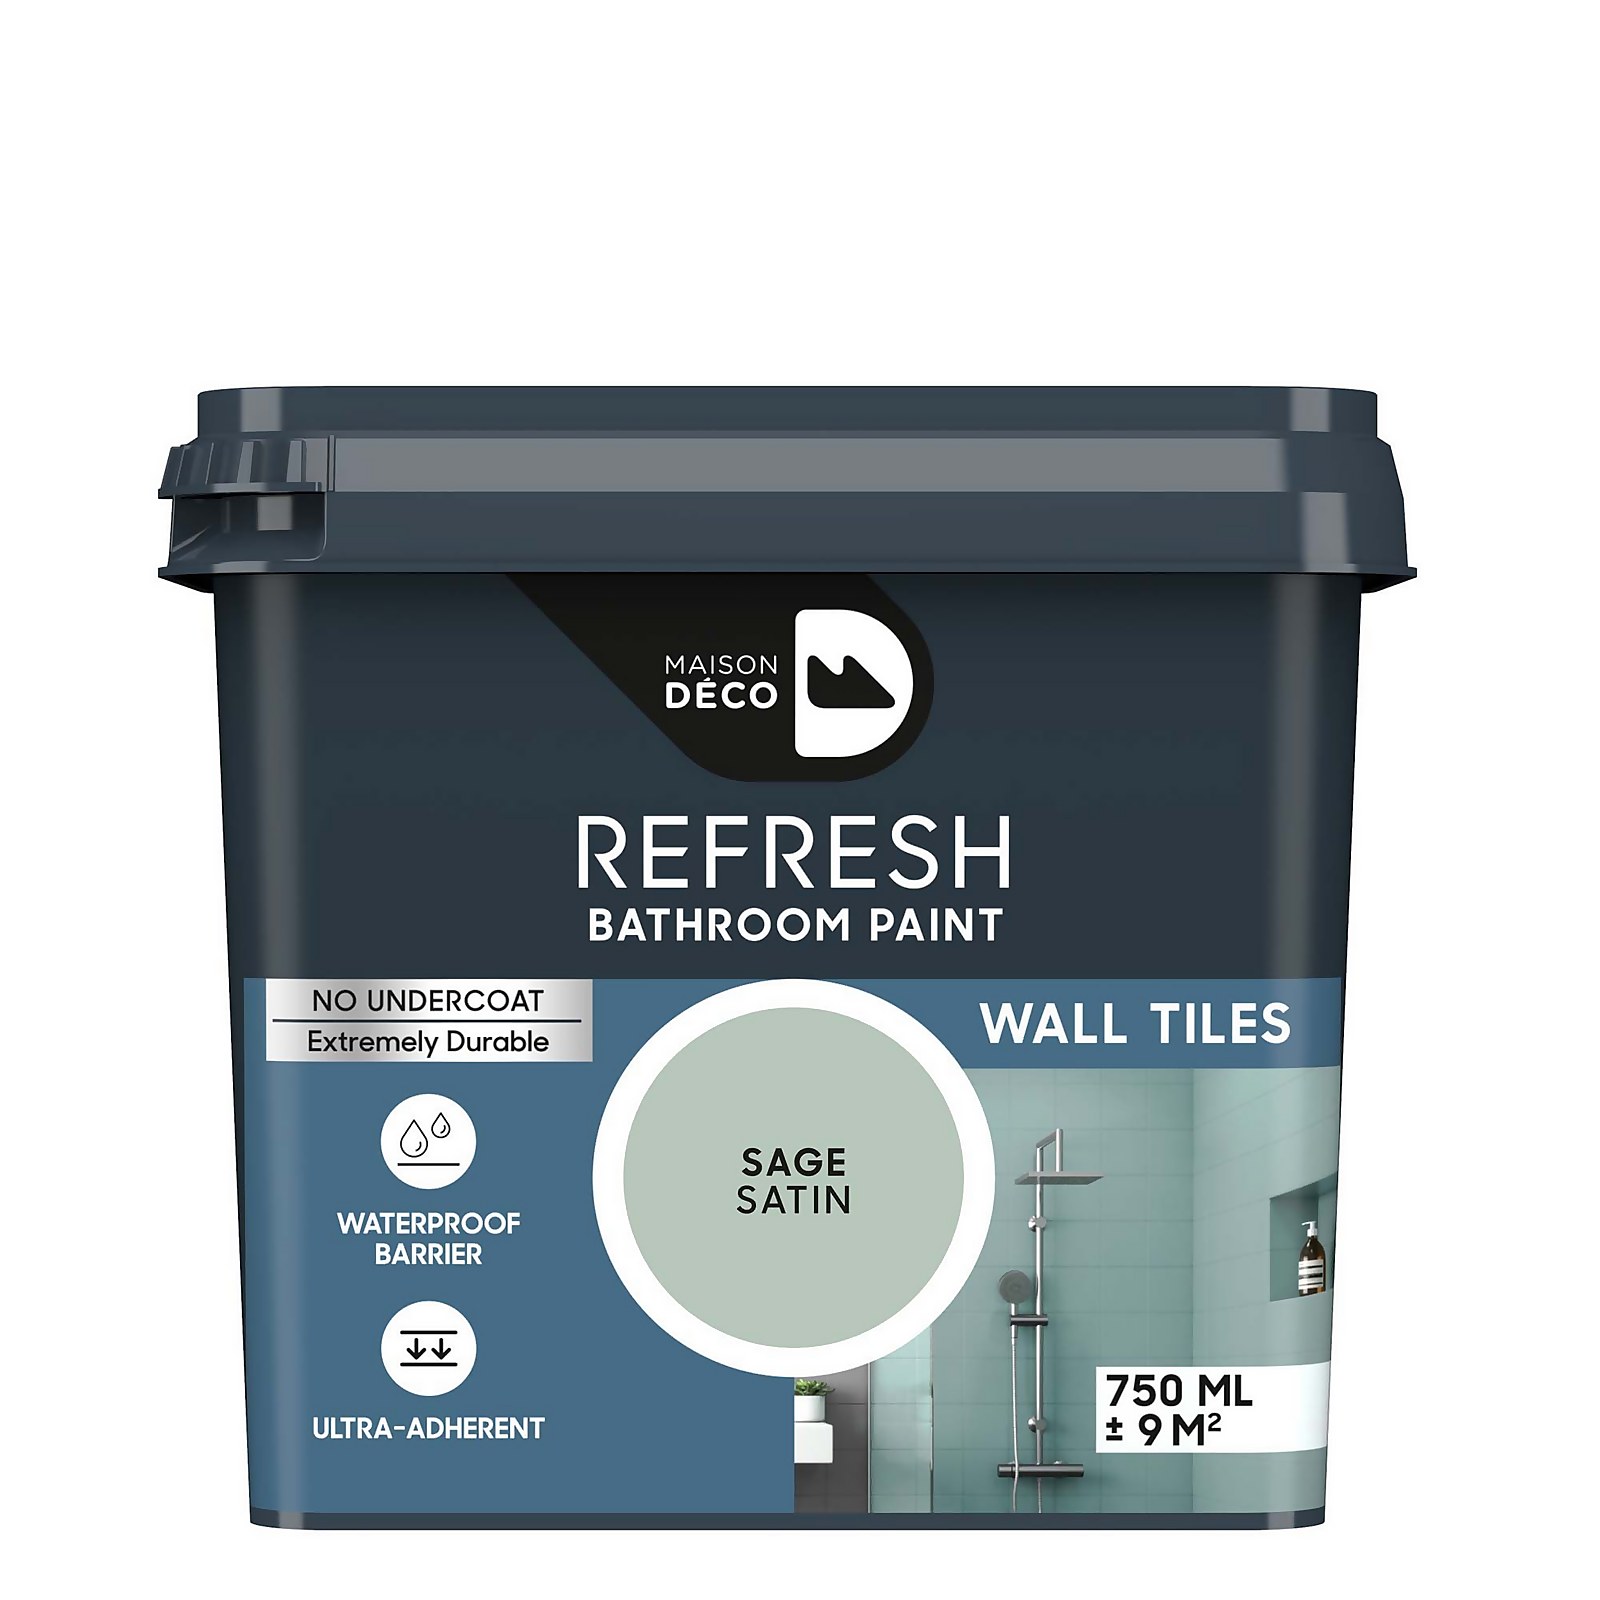 Maison Deco Refresh Bathroom Wall Tile Paint Sage -750ml